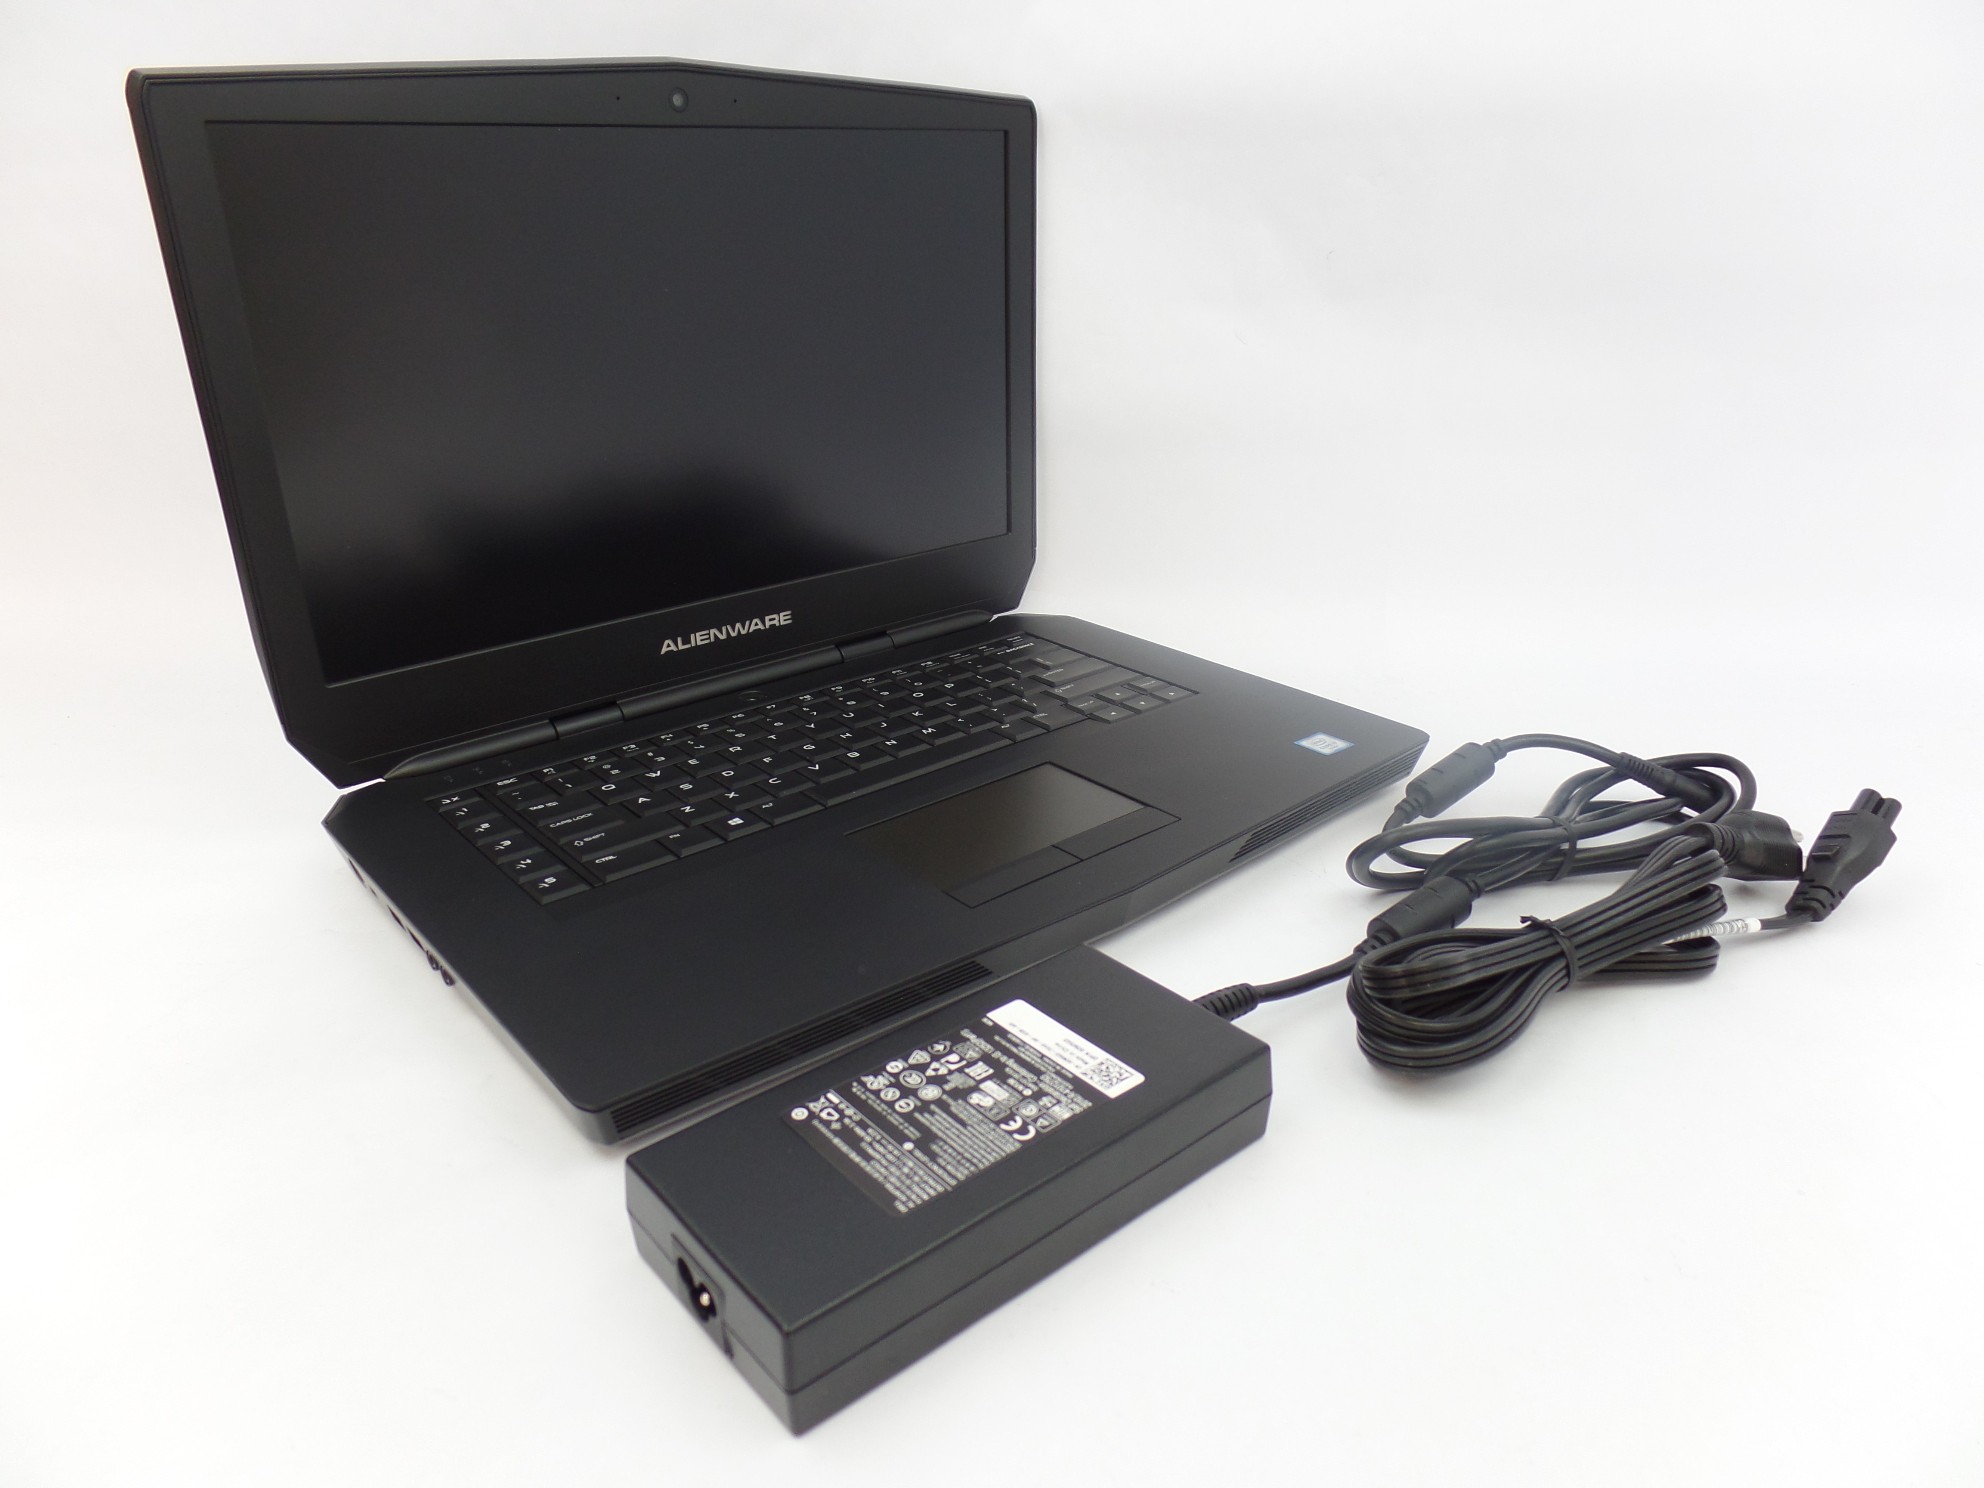 Alienware 15 R2 15.6" FHD i7-6700HQ 8GB 1TB GTX 965M 2GB VRAM W10H Gaming Laptop